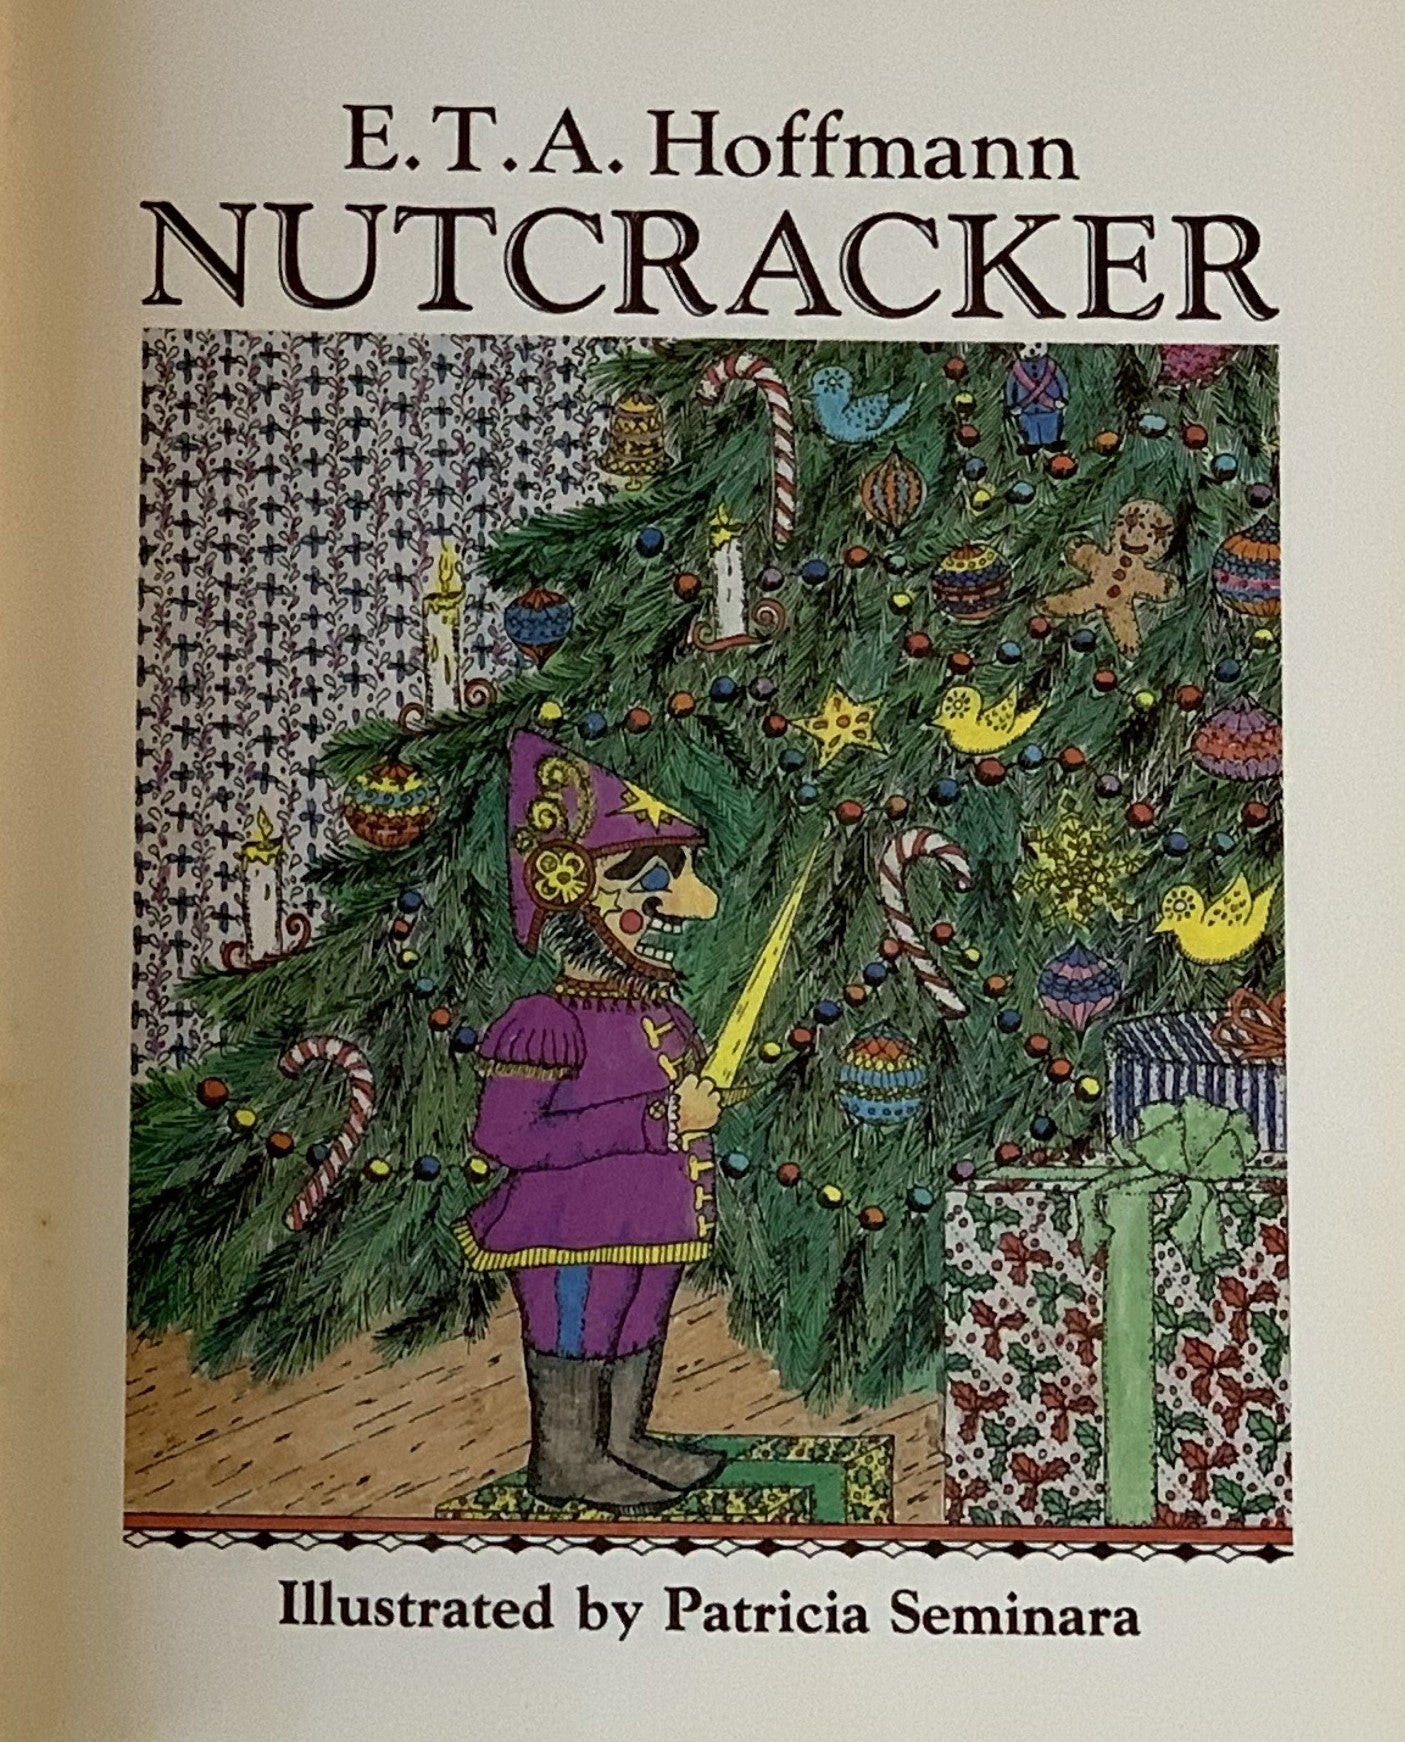 Nutcracker by ETA Hoffmann